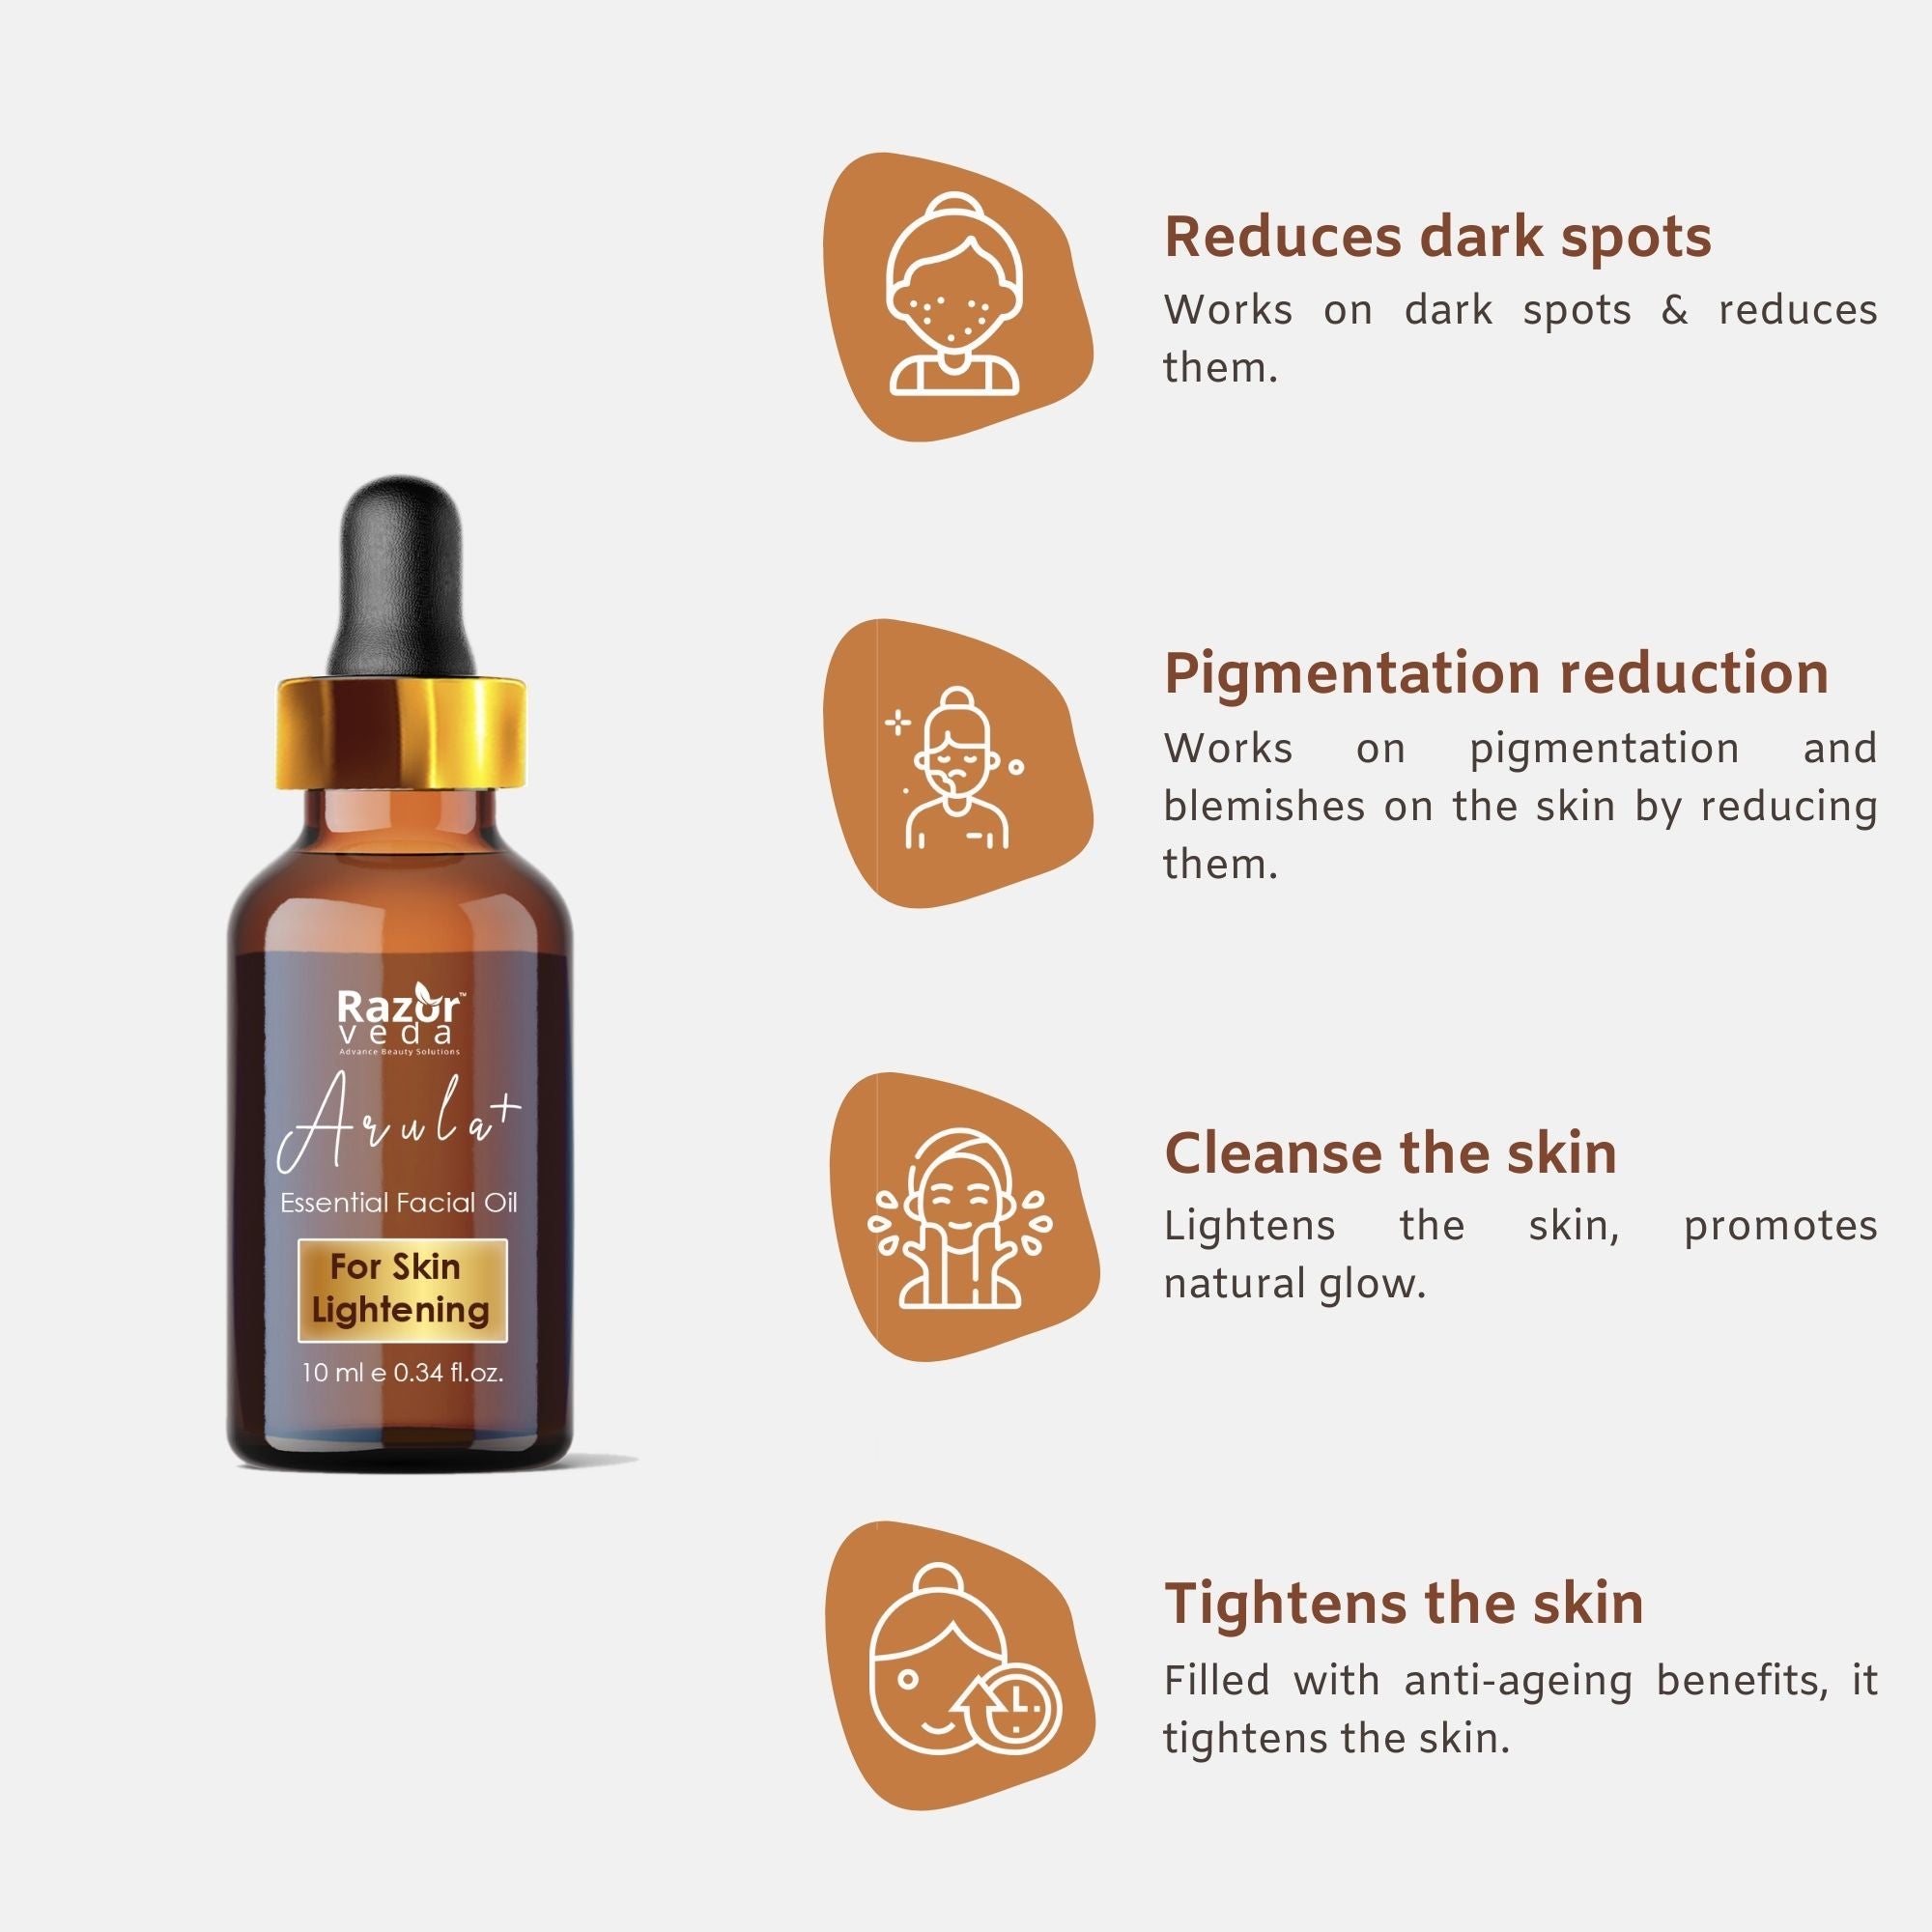 Arula Plus Skin Essential Oil Razorveda